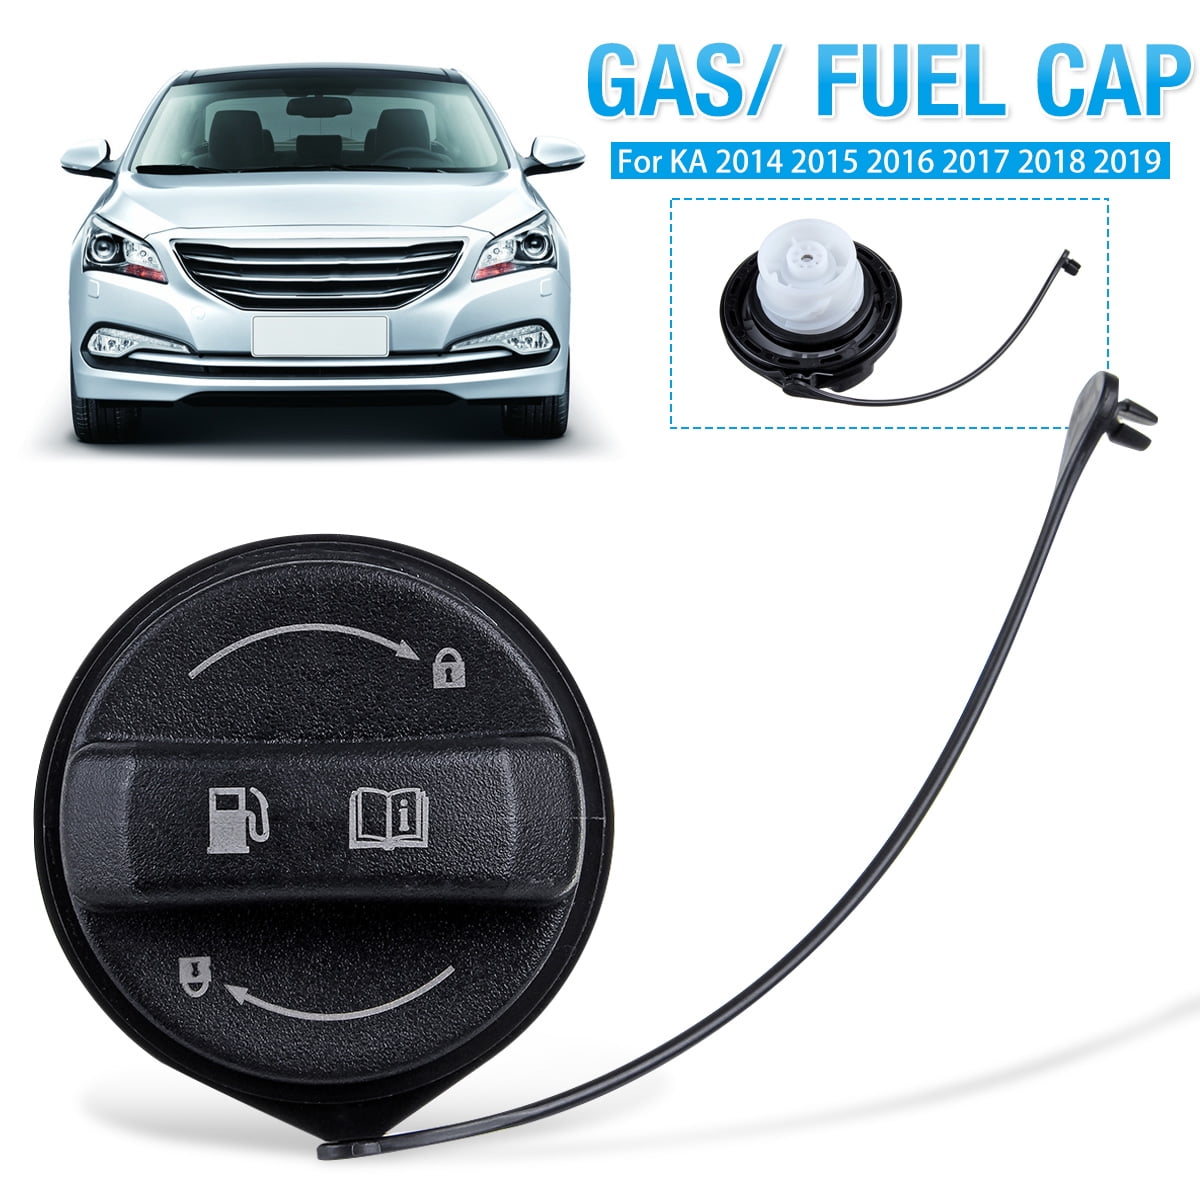 Car Gas Fuel Tank Oil Cap Cover Compatible with Peugeot 106 107 206 207 307 308 406 407 Fuel Tank Cap